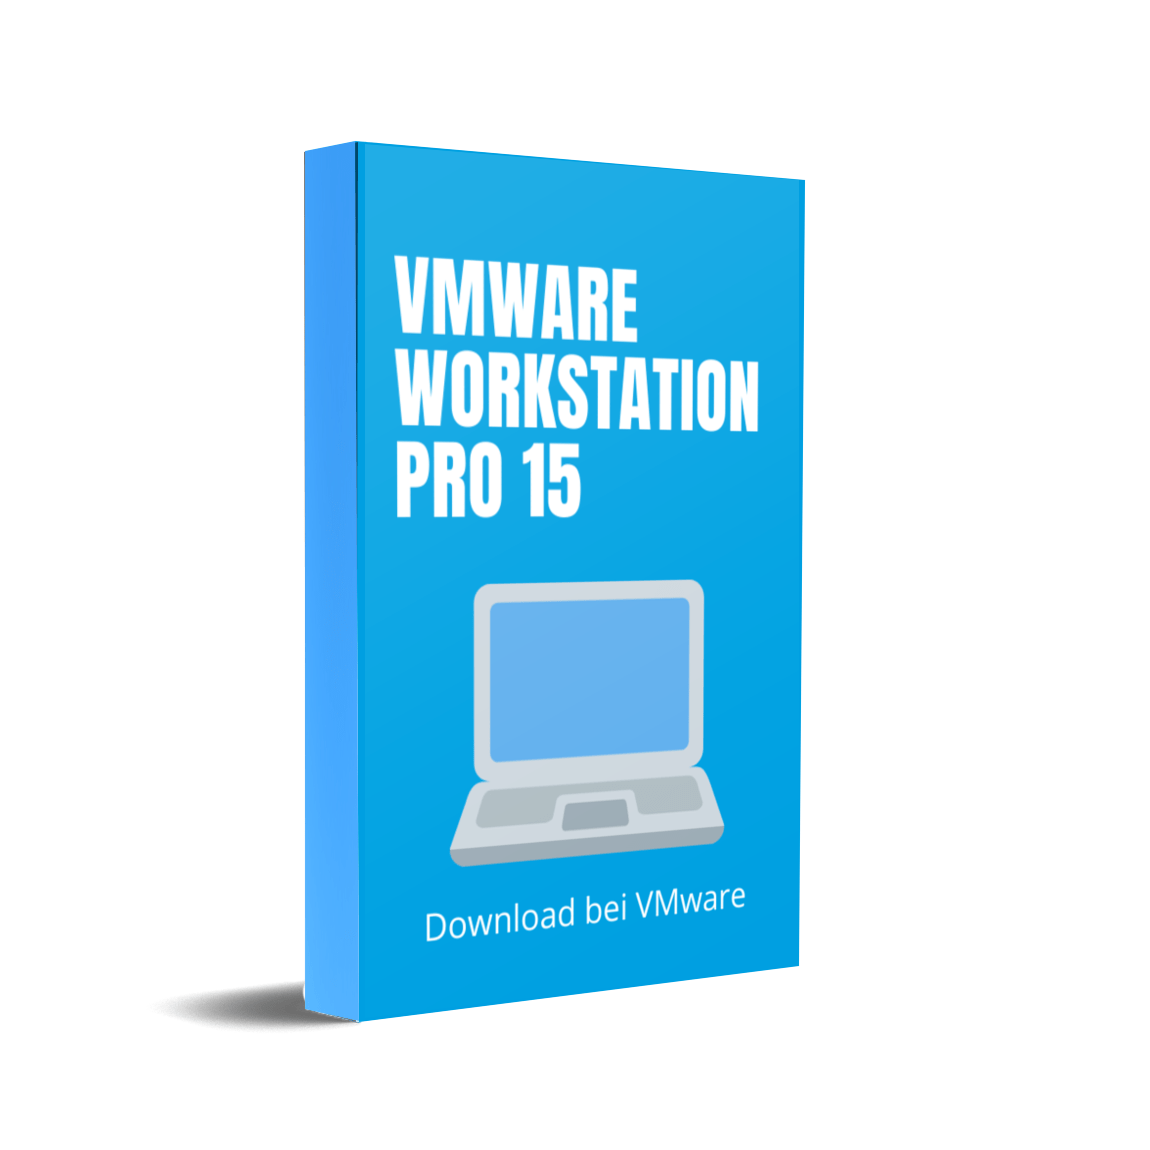 vmware workstation 15 iso image download